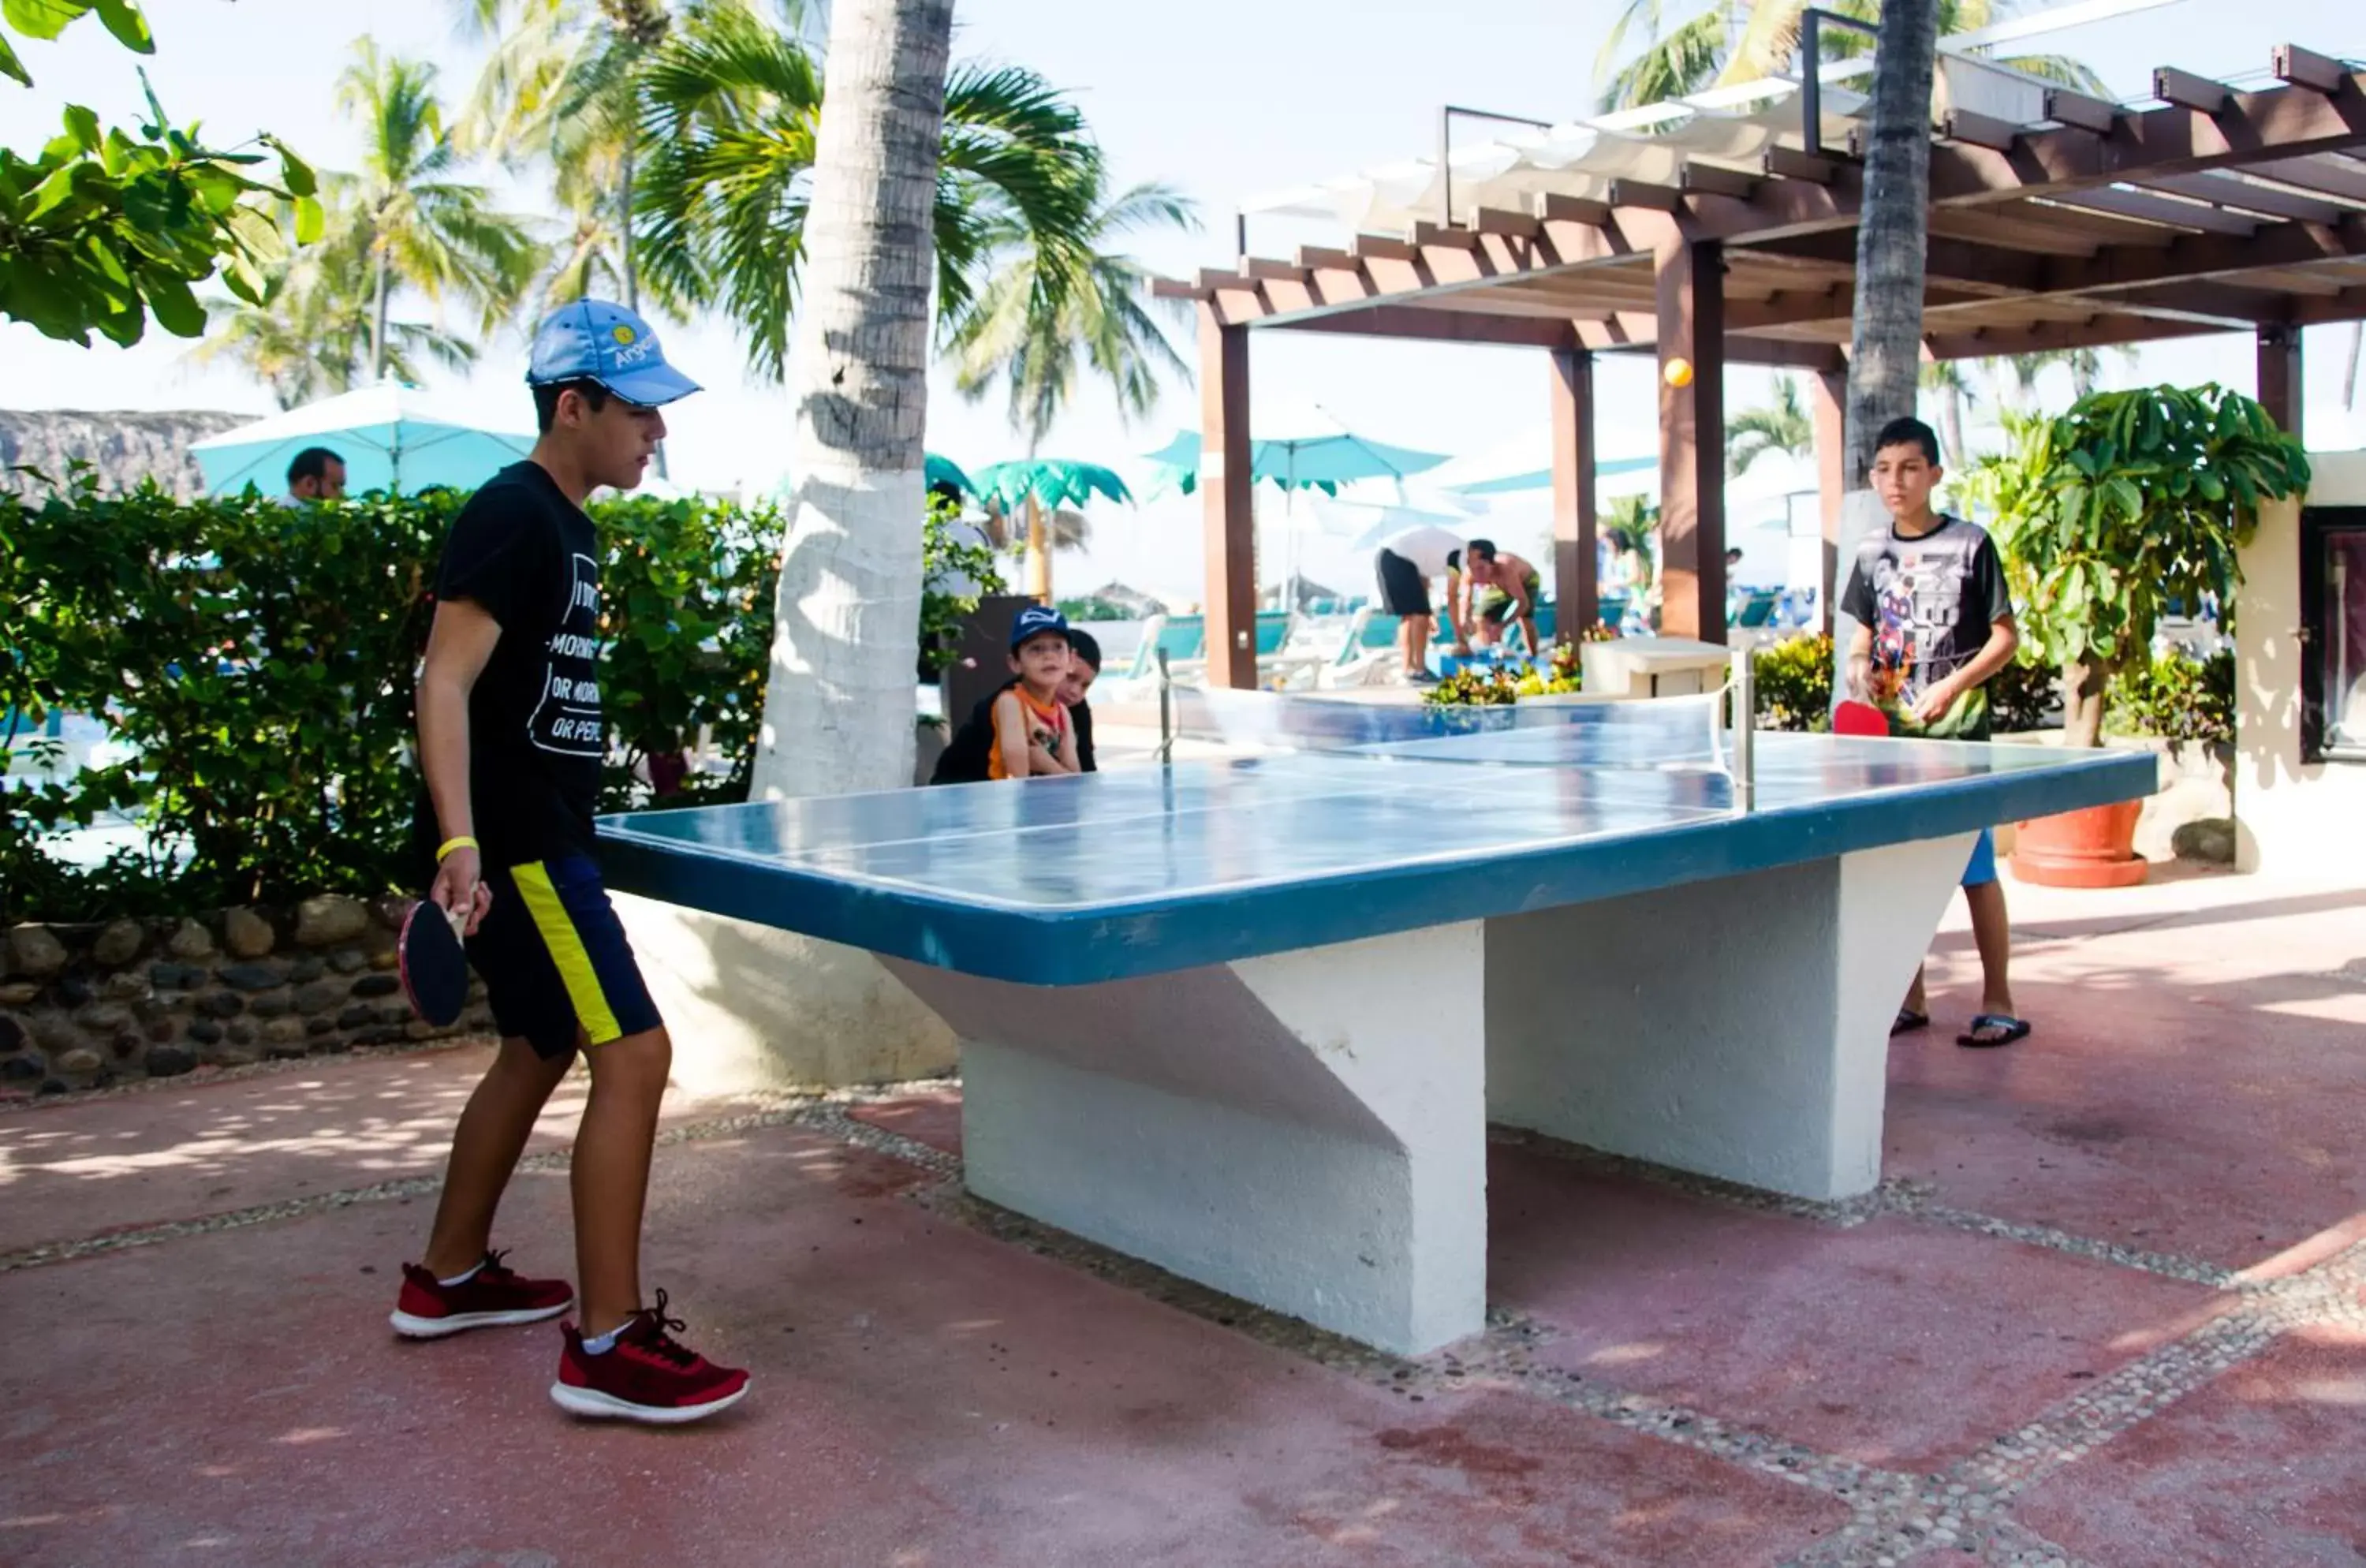 Table tennis in Fontan Ixtapa